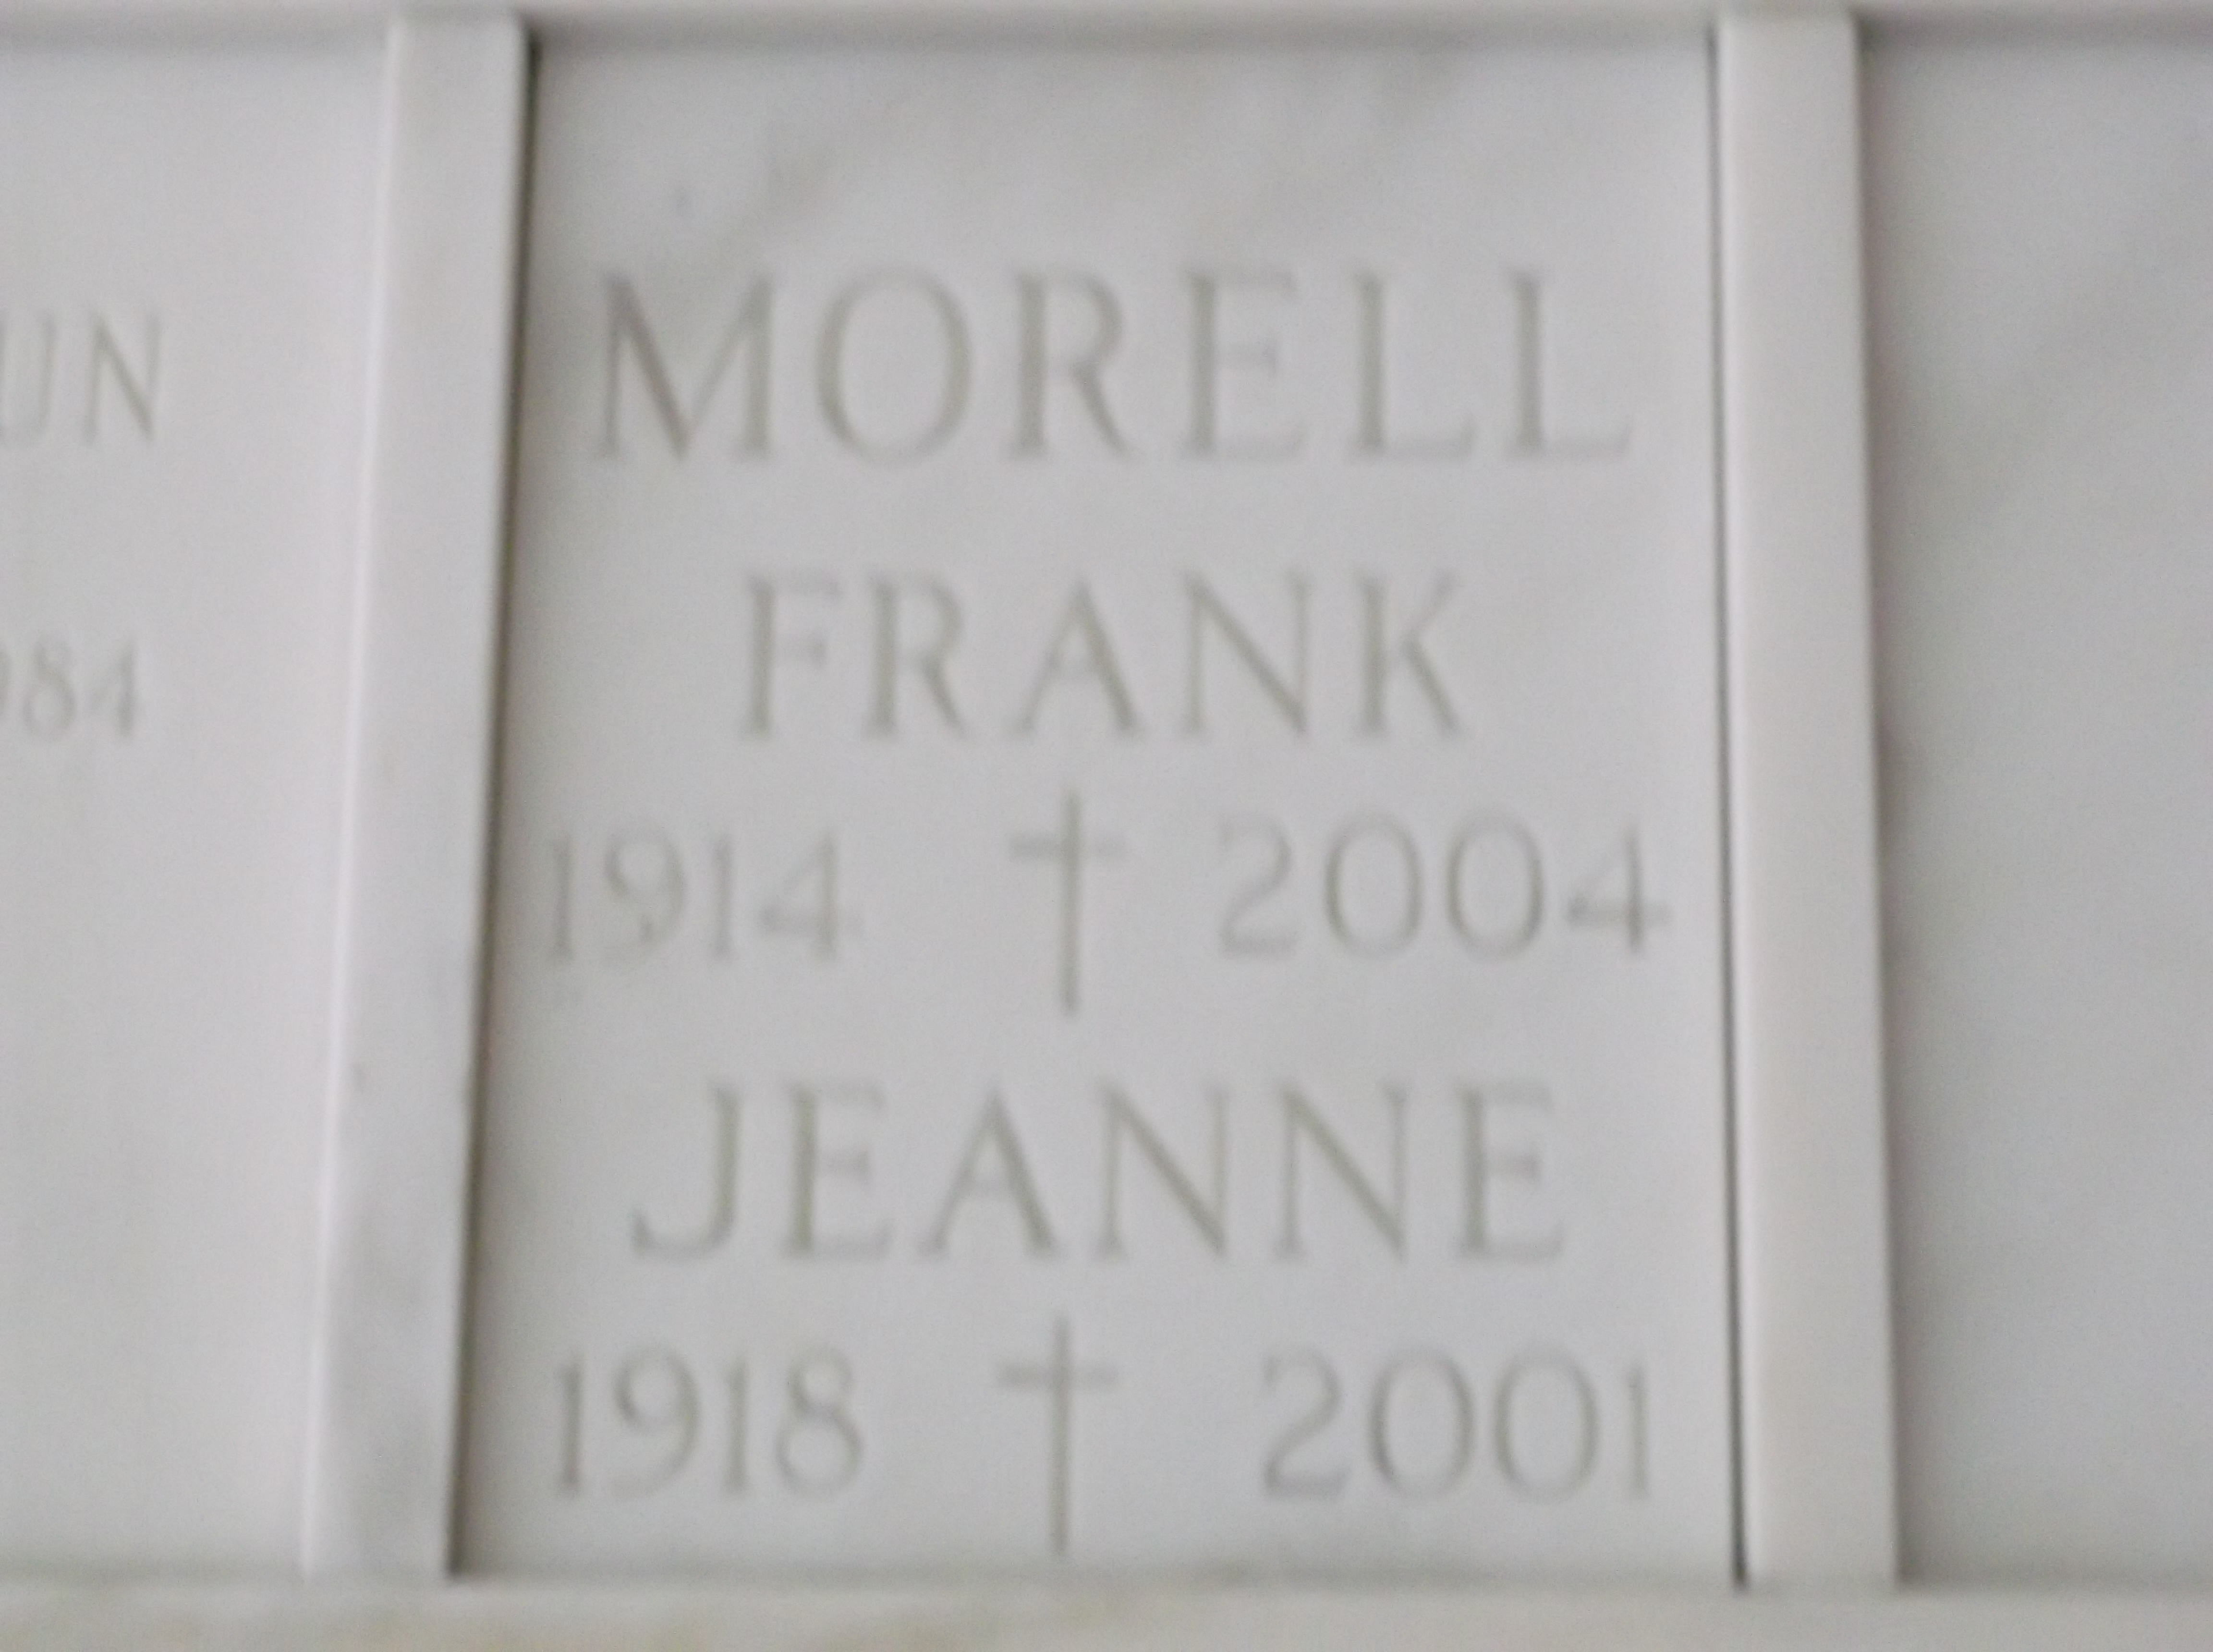 Frank Morell